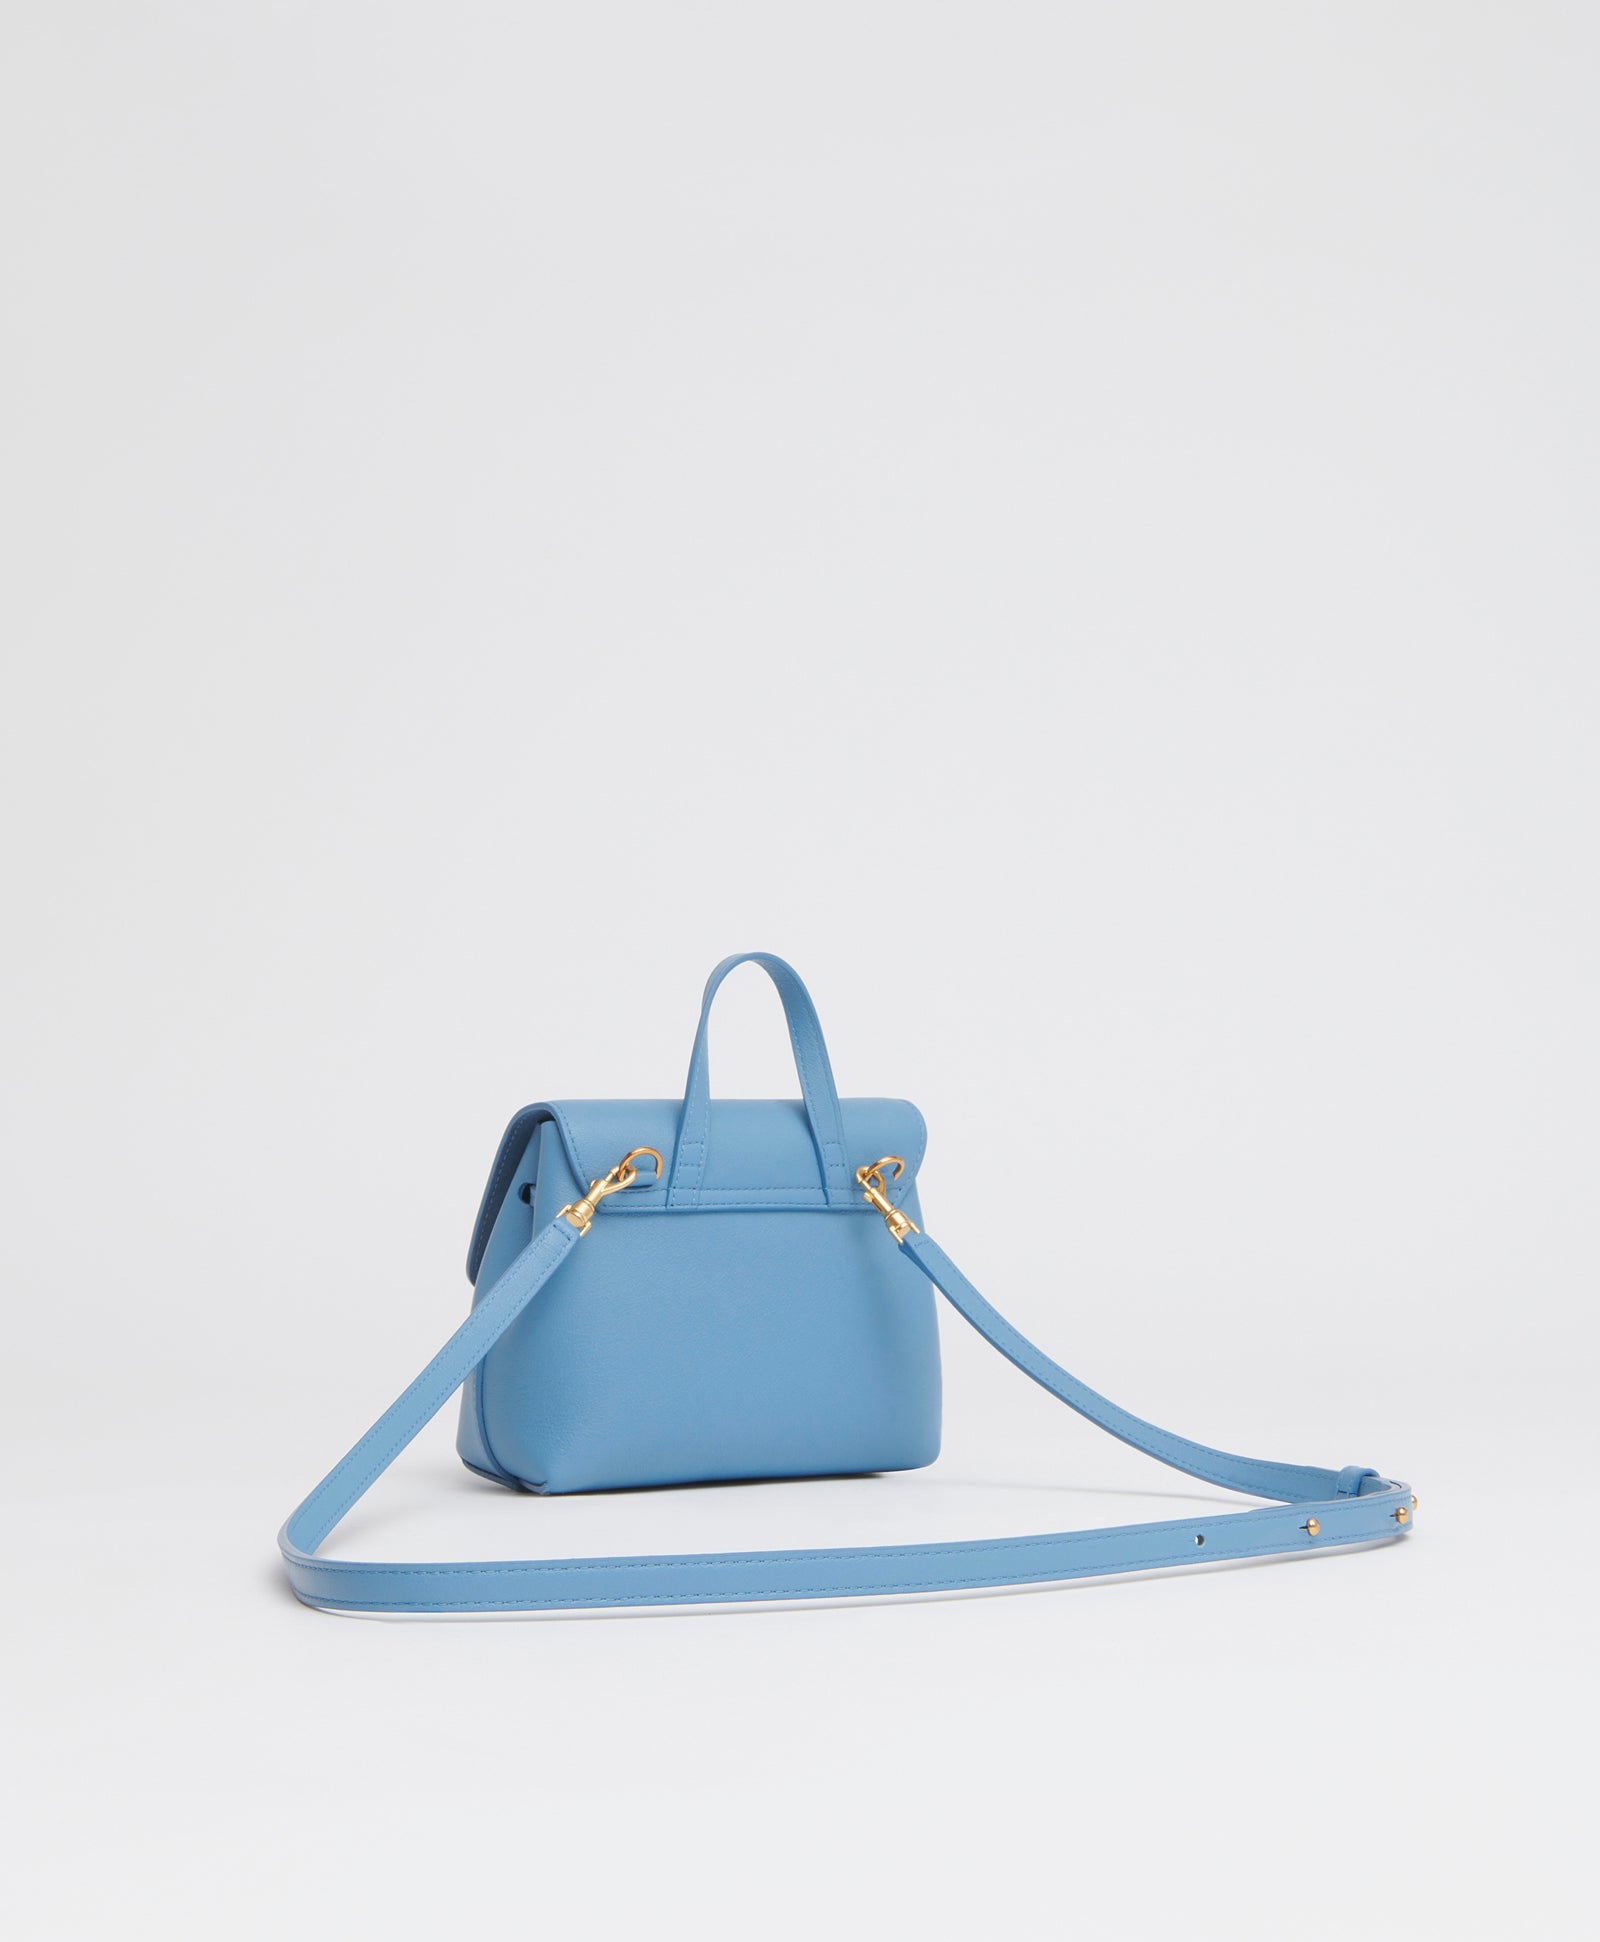 Mini Bags, Small Leather Handbags & Purses | MANSUR GAVRIEL®